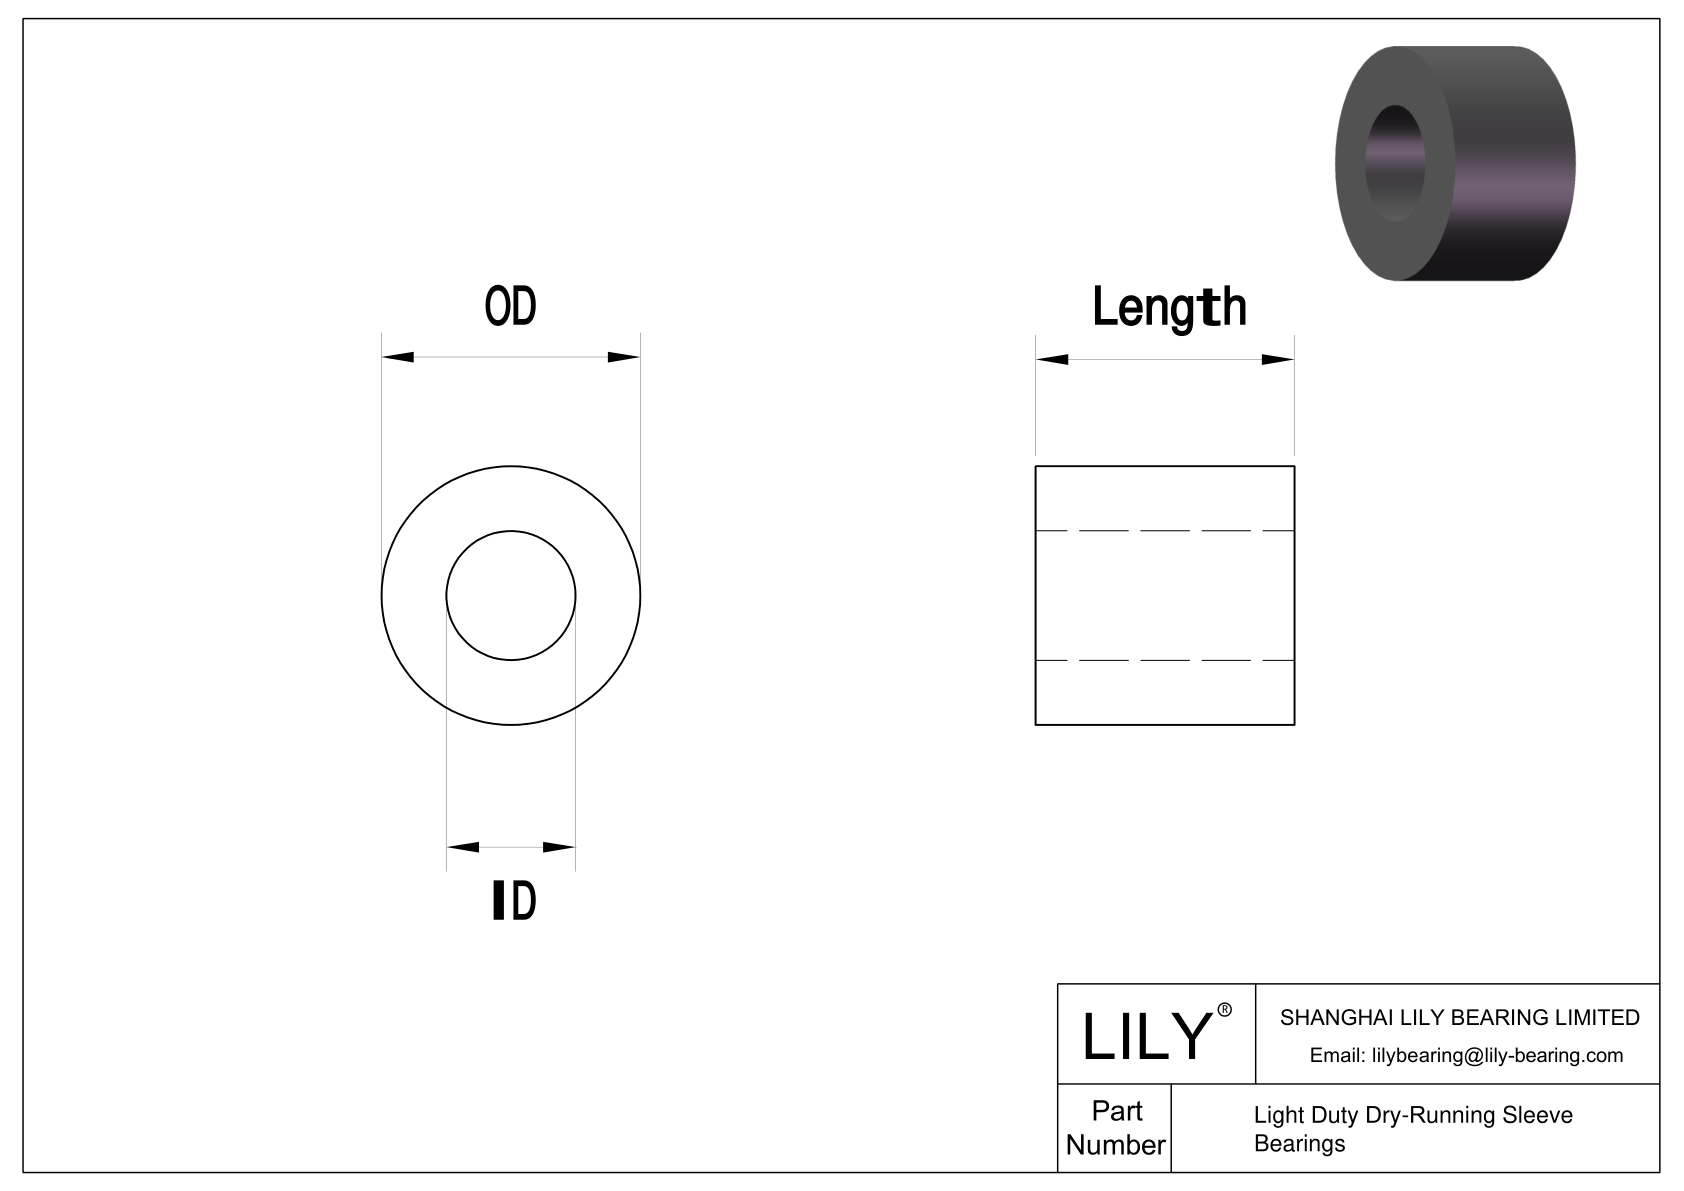 6389K733 Light Duty Dry-Running Sleeve Bearings cad drawing